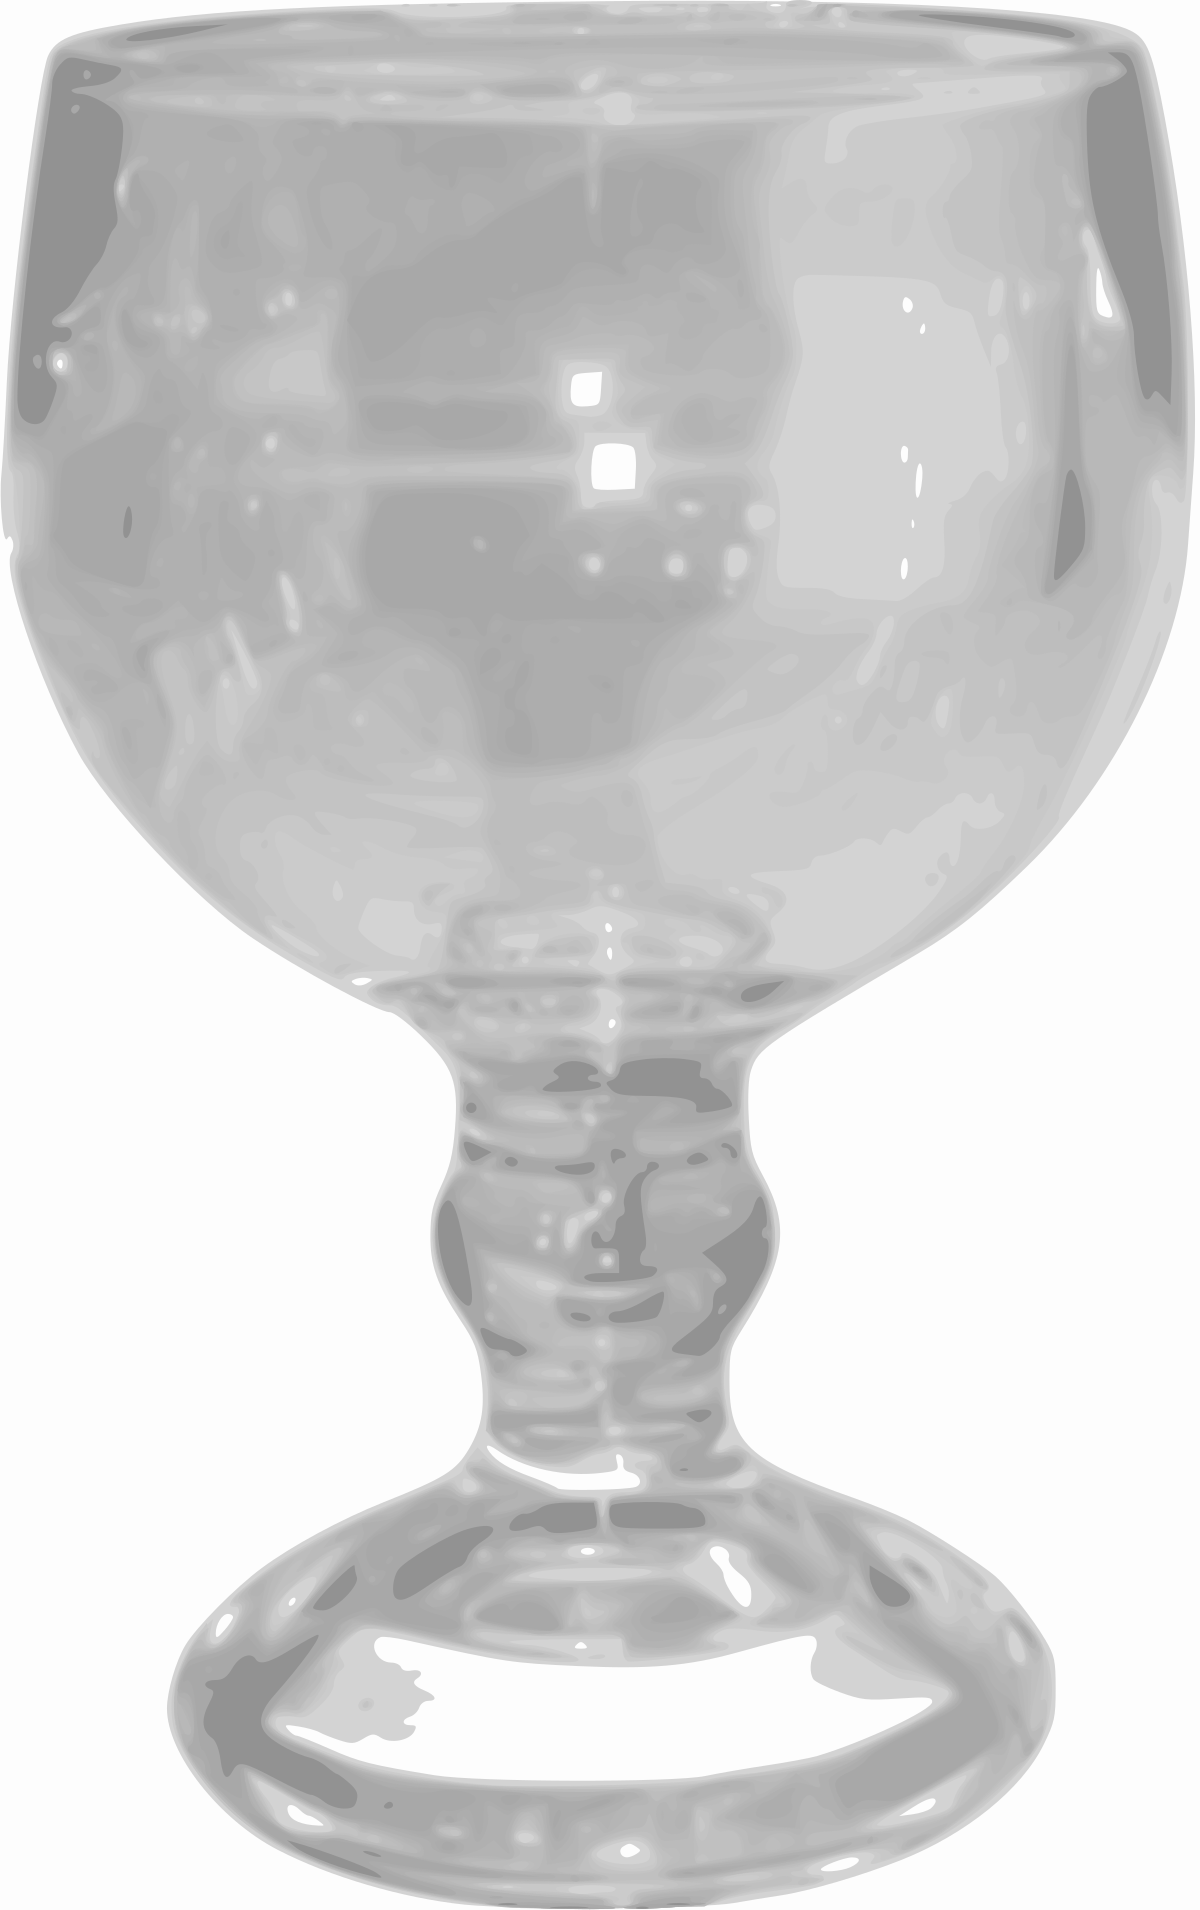 goblet glass definition